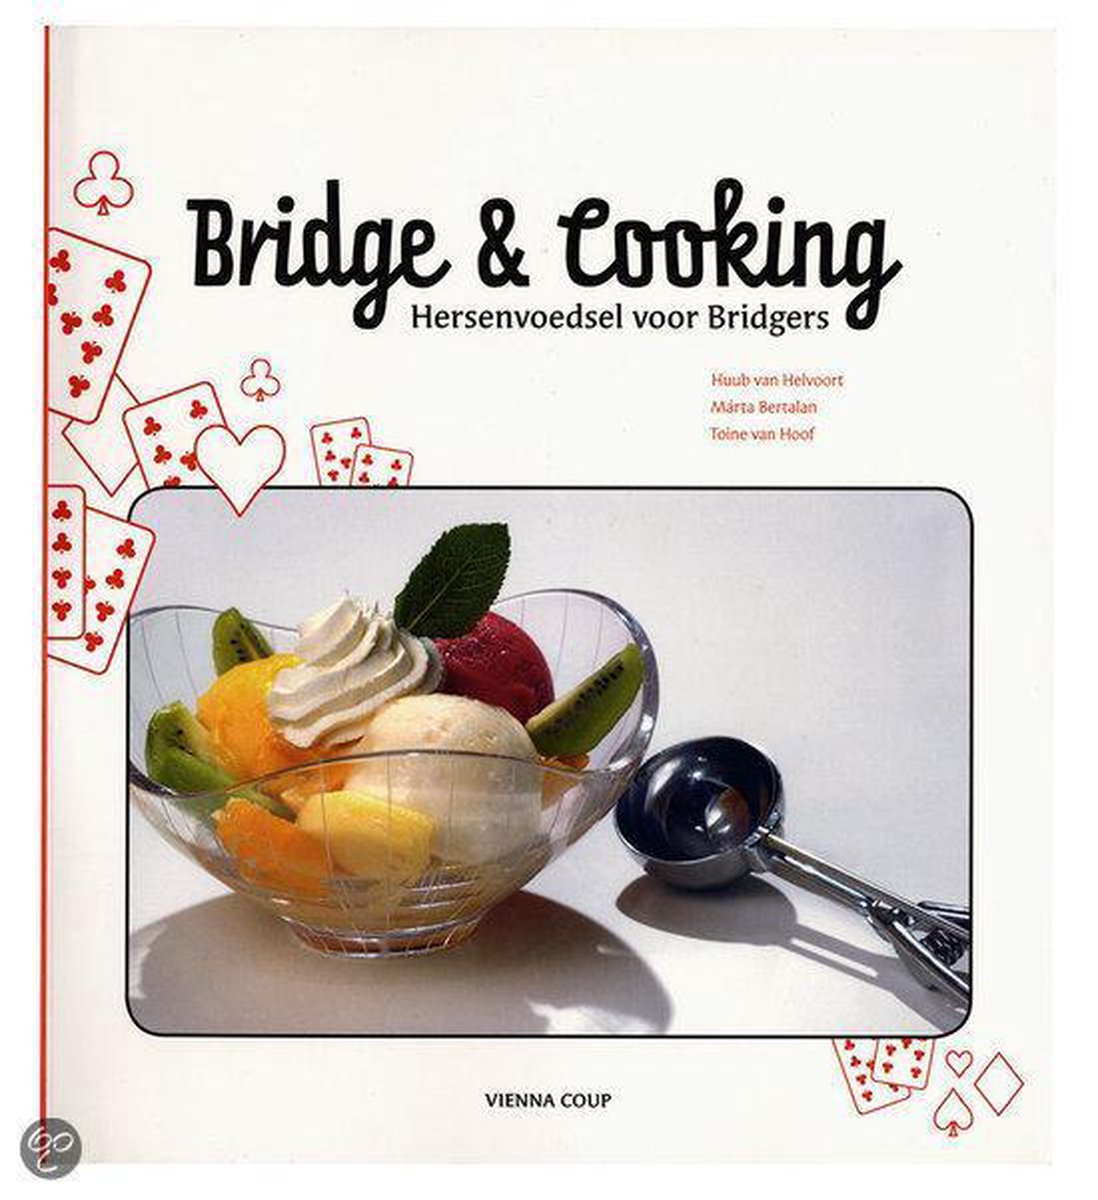 Bridge & Cooking